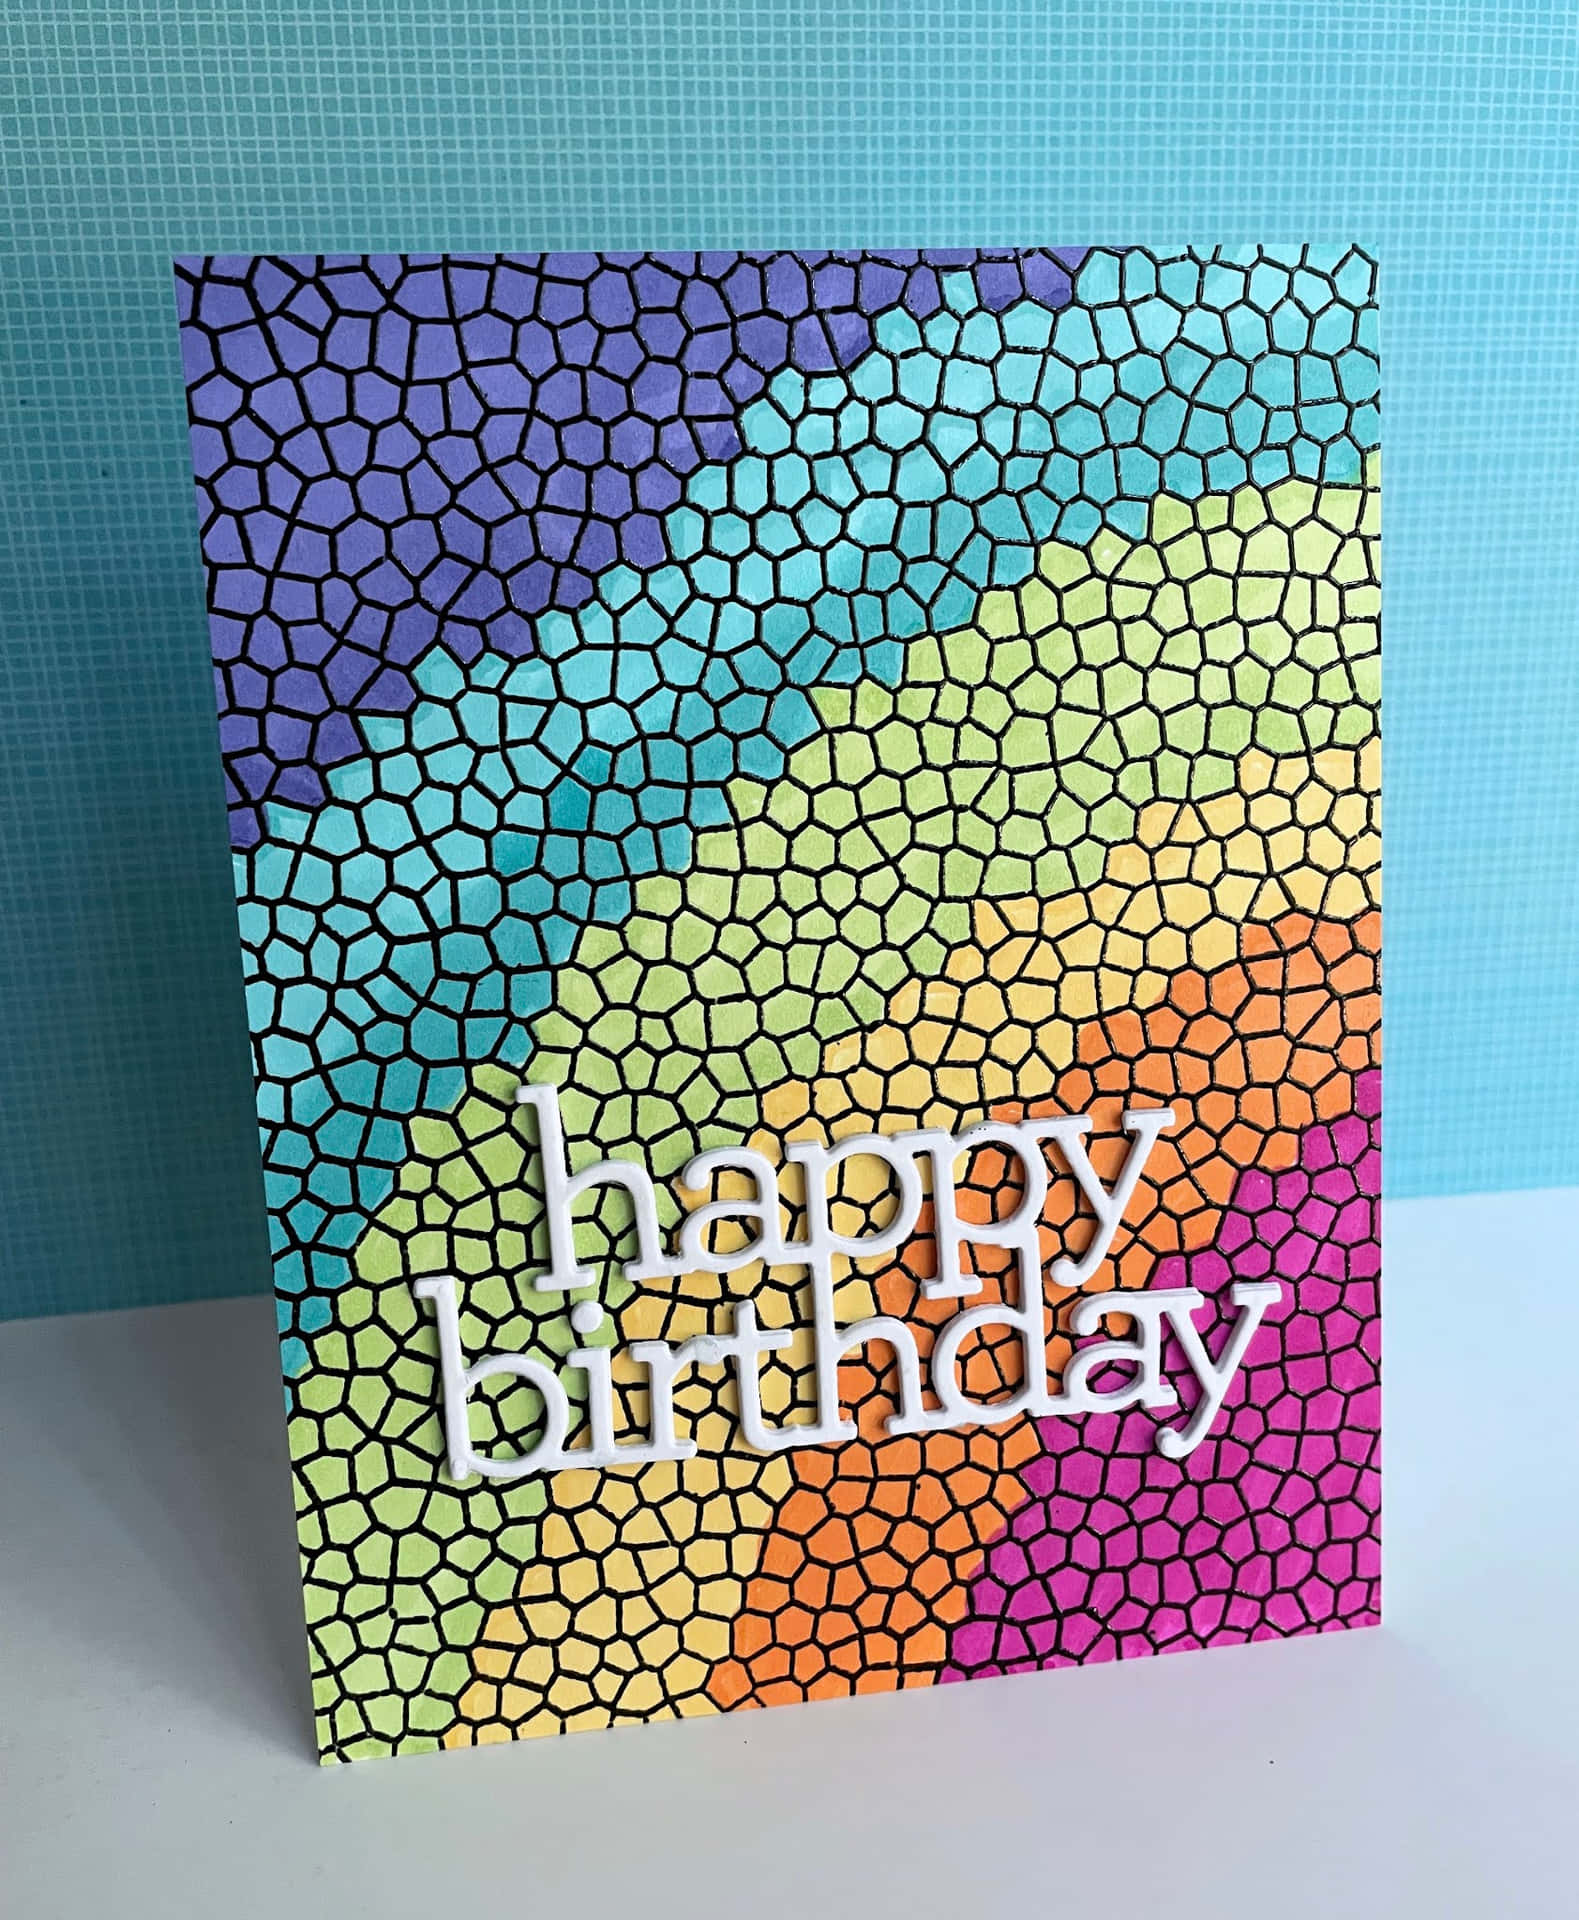 A Rainbow Birthday Card With The Word Happy